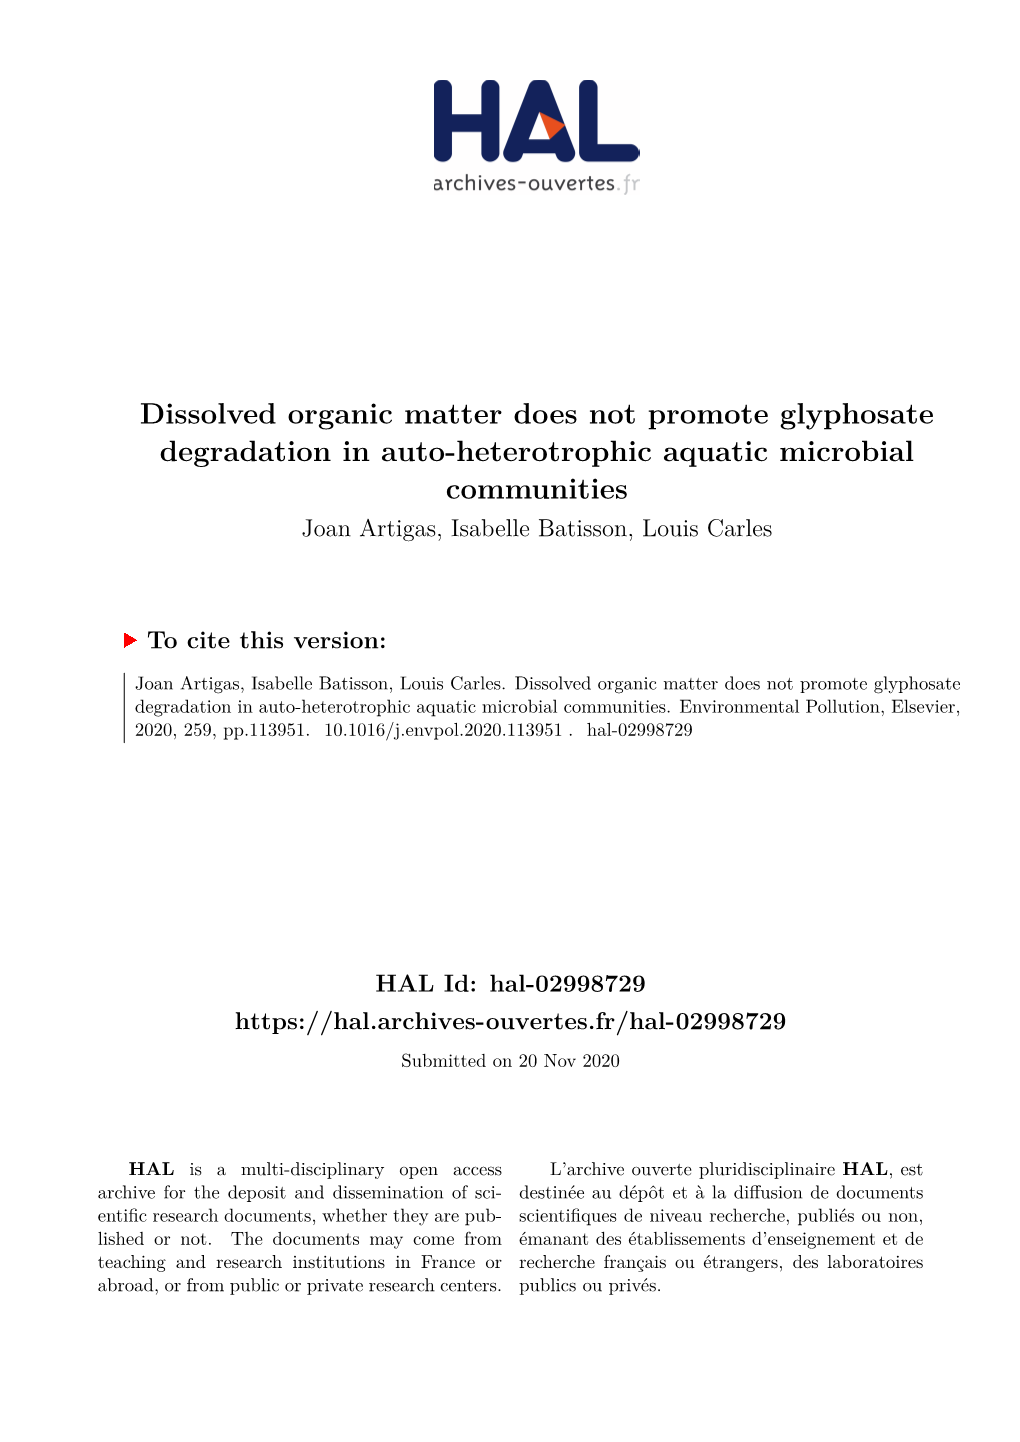 Dissolved Organic Matter Does Not Promote Glyphosate Degradation in Auto-Heterotrophic Aquatic Microbial Communities Joan Artigas, Isabelle Batisson, Louis Carles